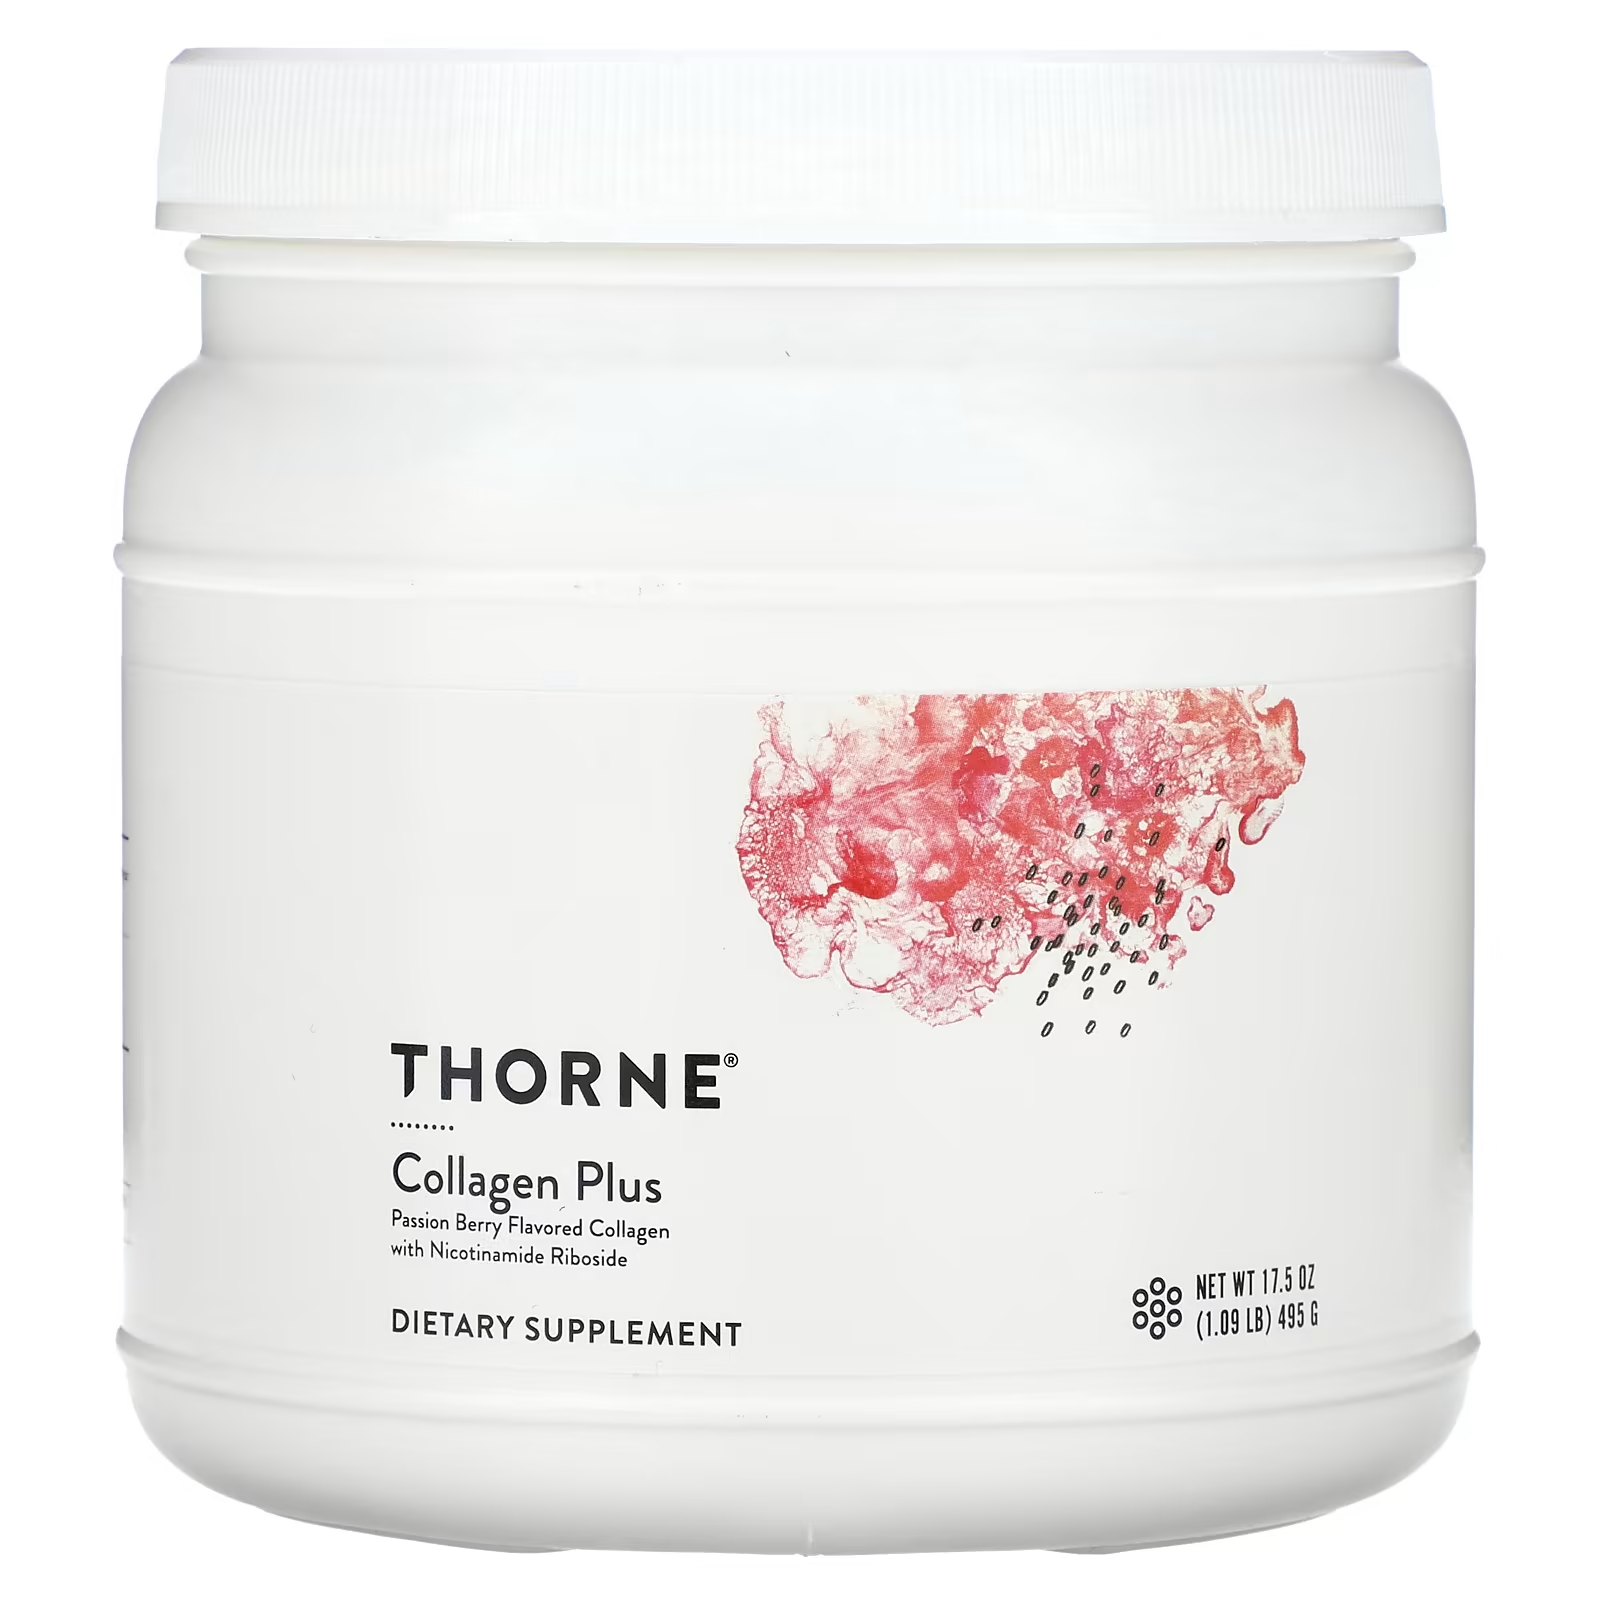 Пищевая добавка Thorne Collagen Plus Passion Berry, 495 г thorne research collagen plus маракуйя 495 г 17 5 унции